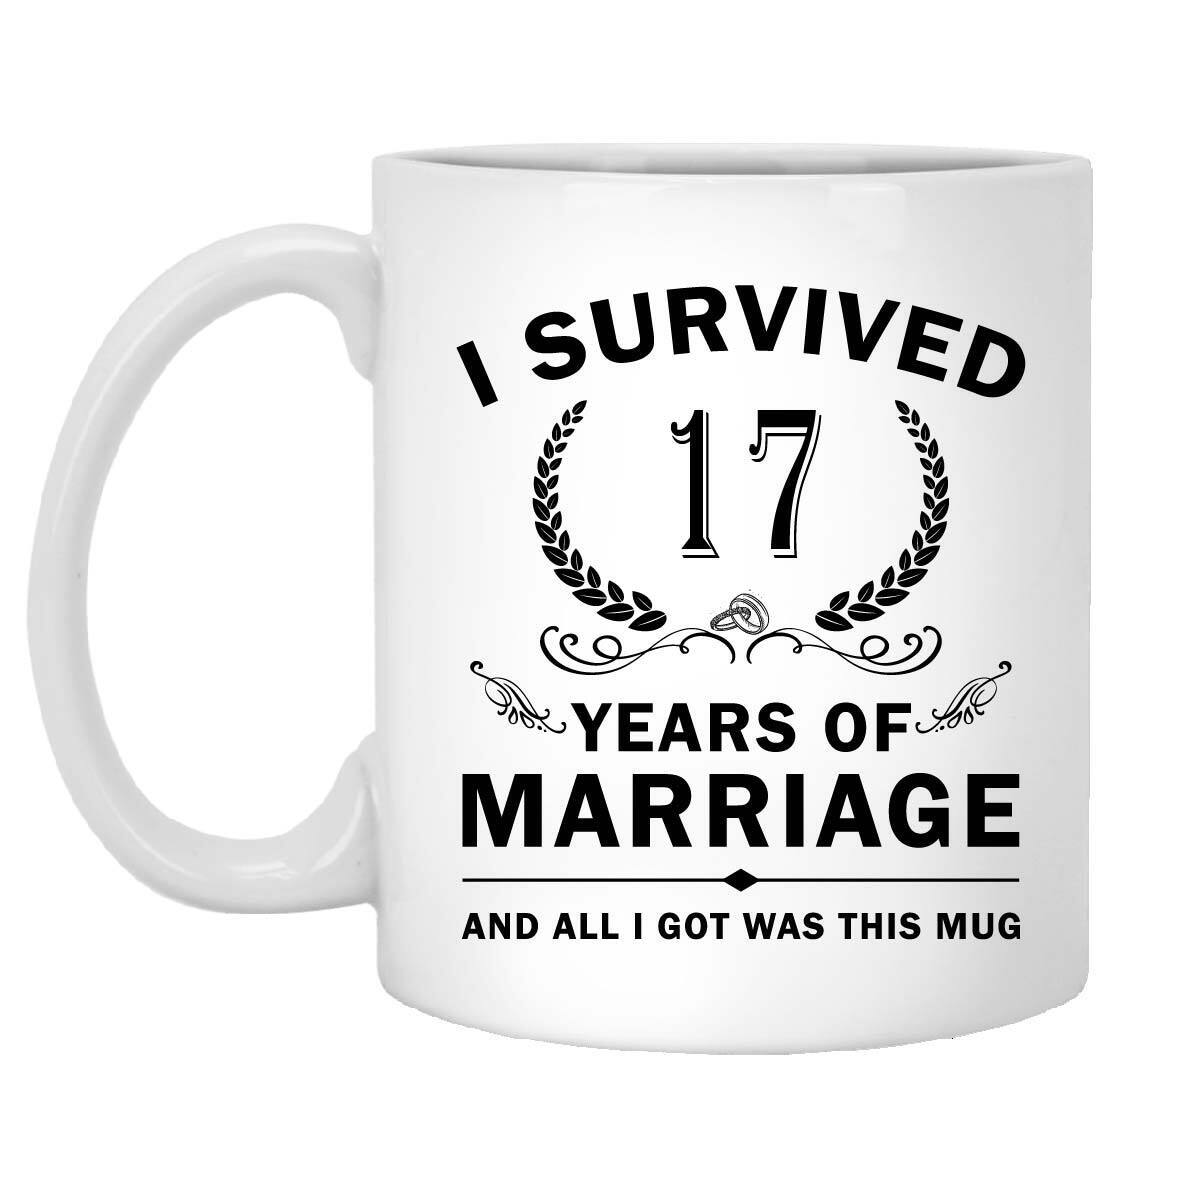 17 Years of Marriage 17th Wedding Anniversary Mugs for Couple Husband Wife MUG